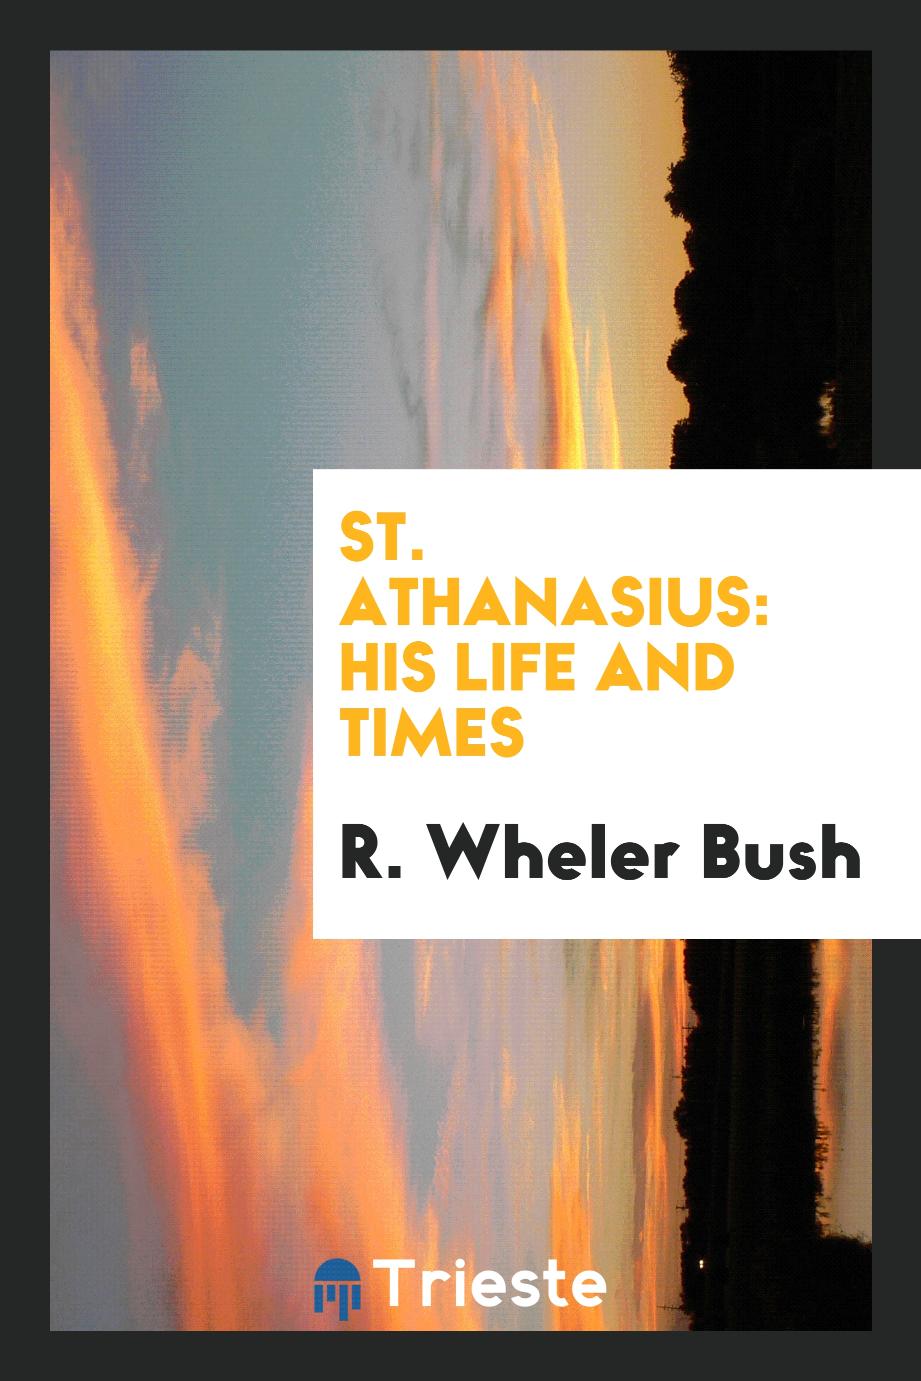 St. Athanasius: his life and times